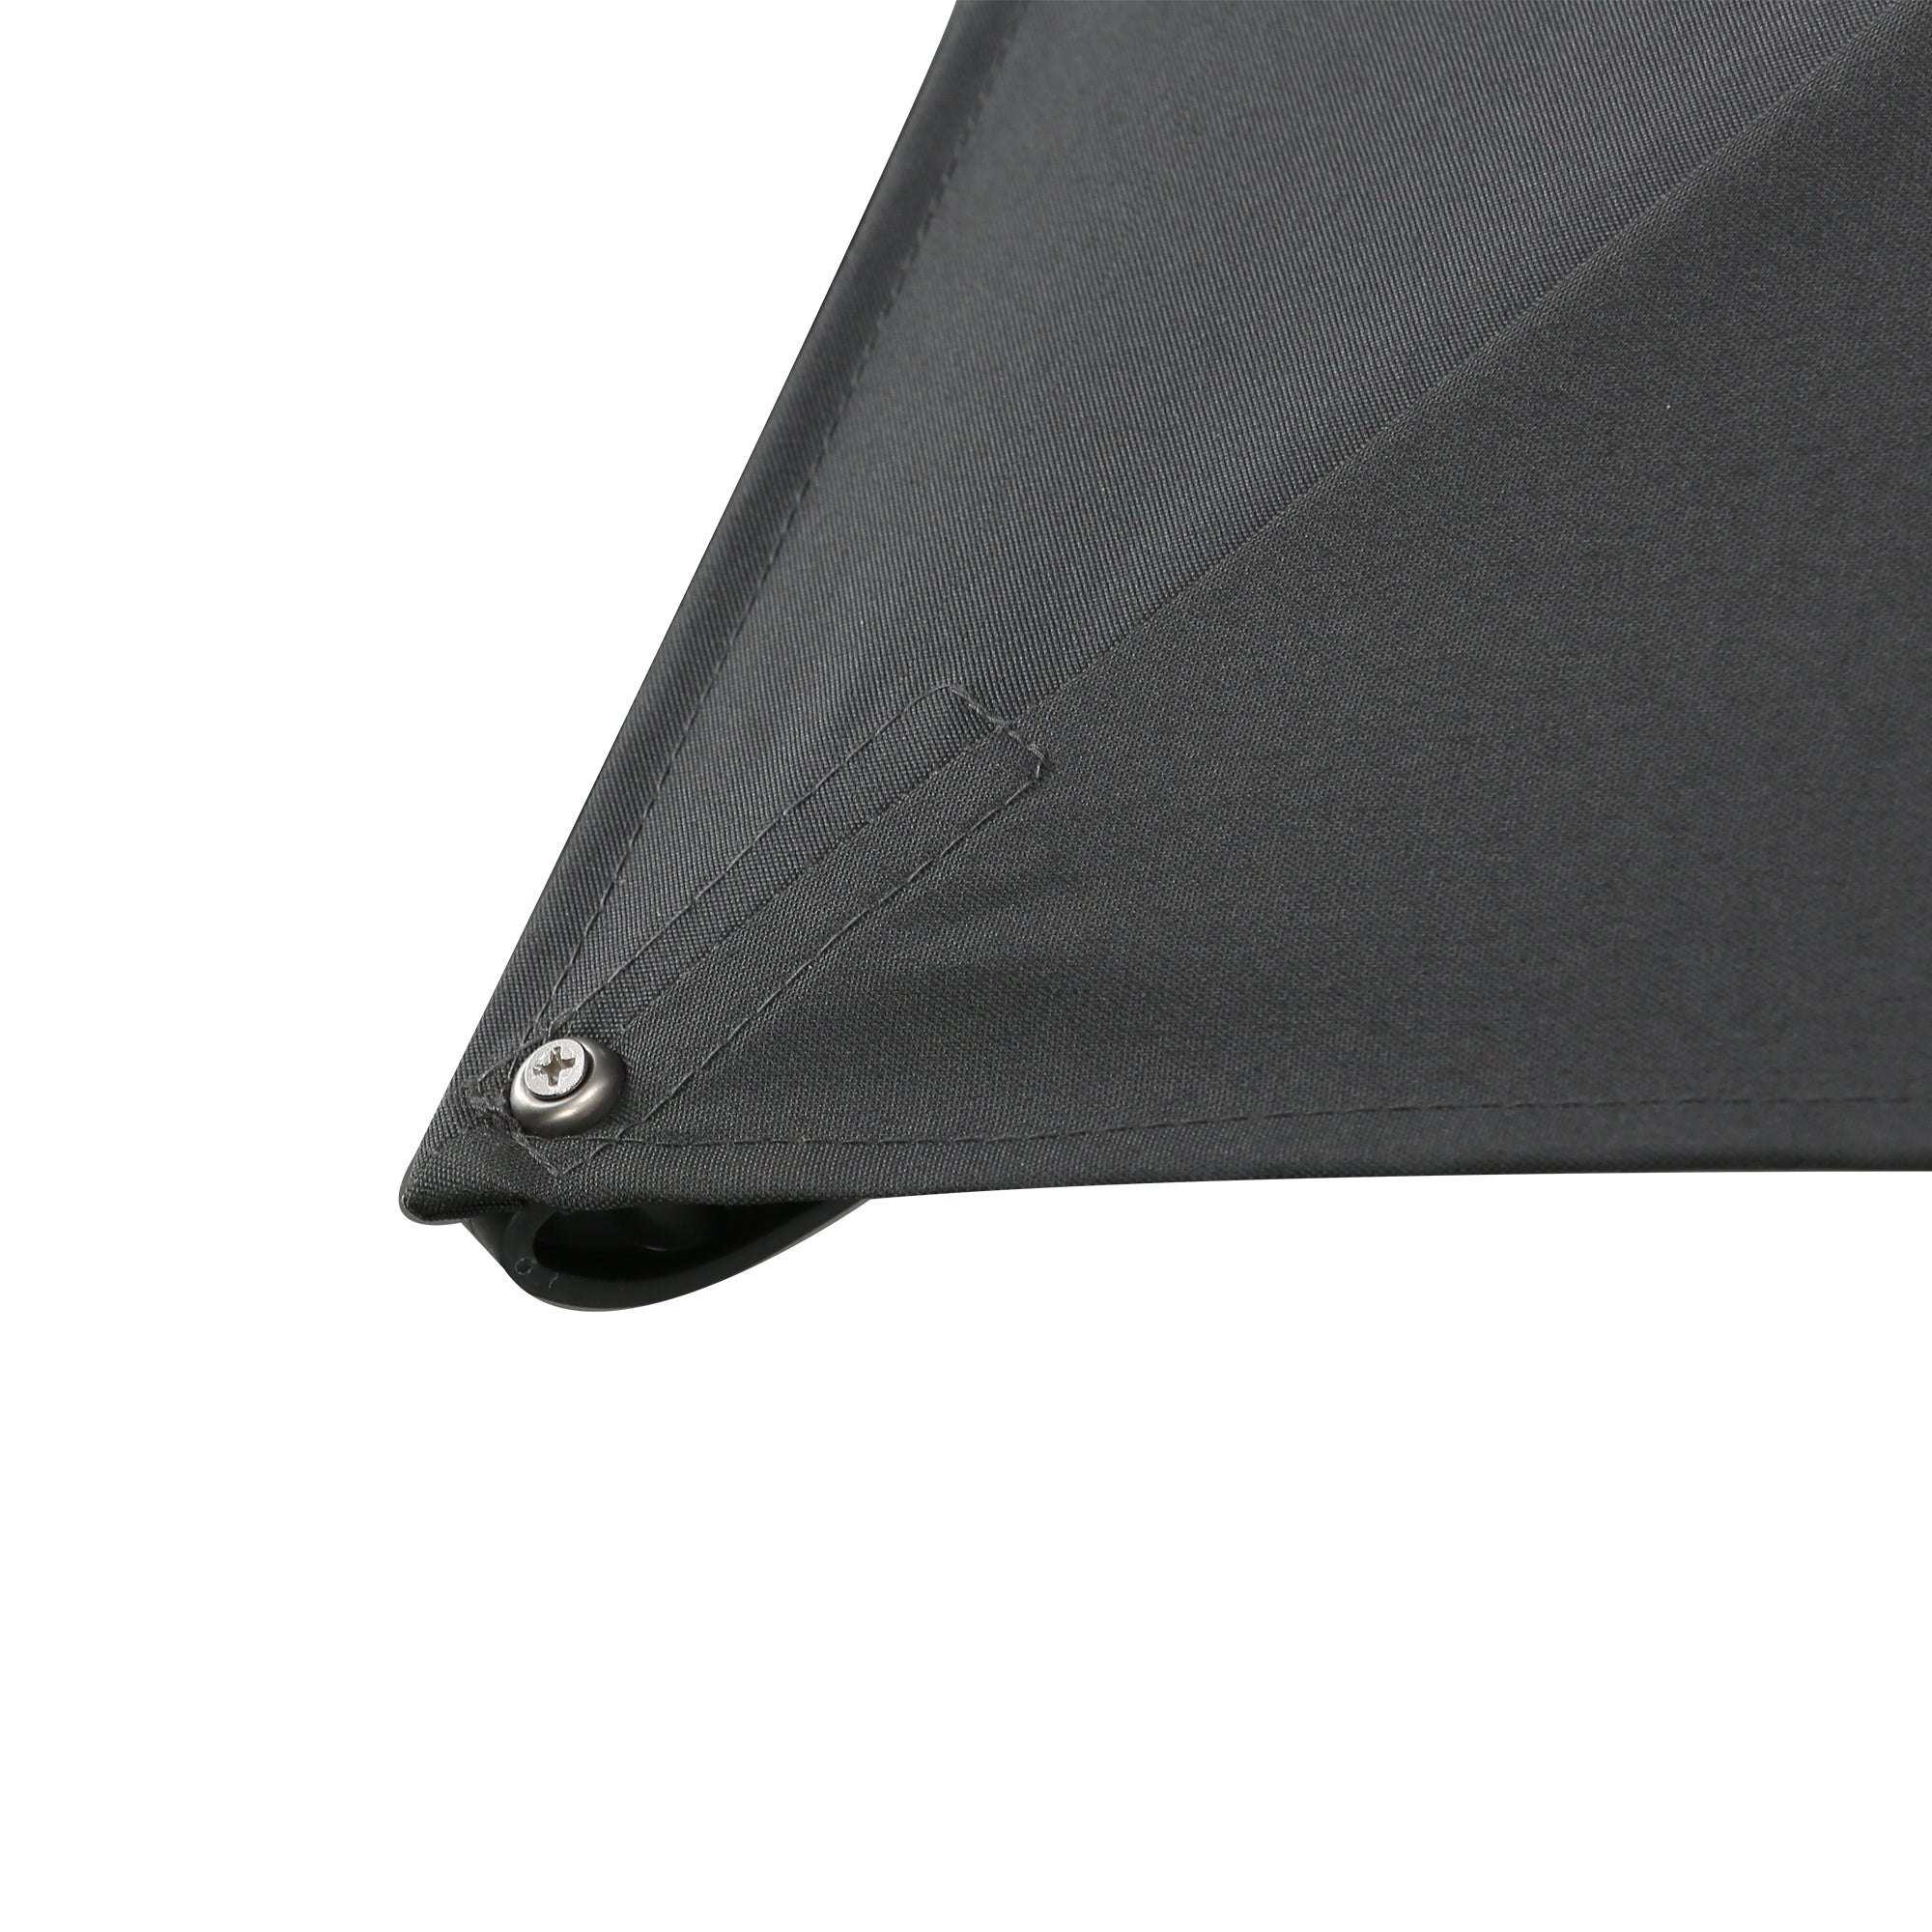 10ft Offset Patio Umbrella, Hanging Cantilever gray-aluminium